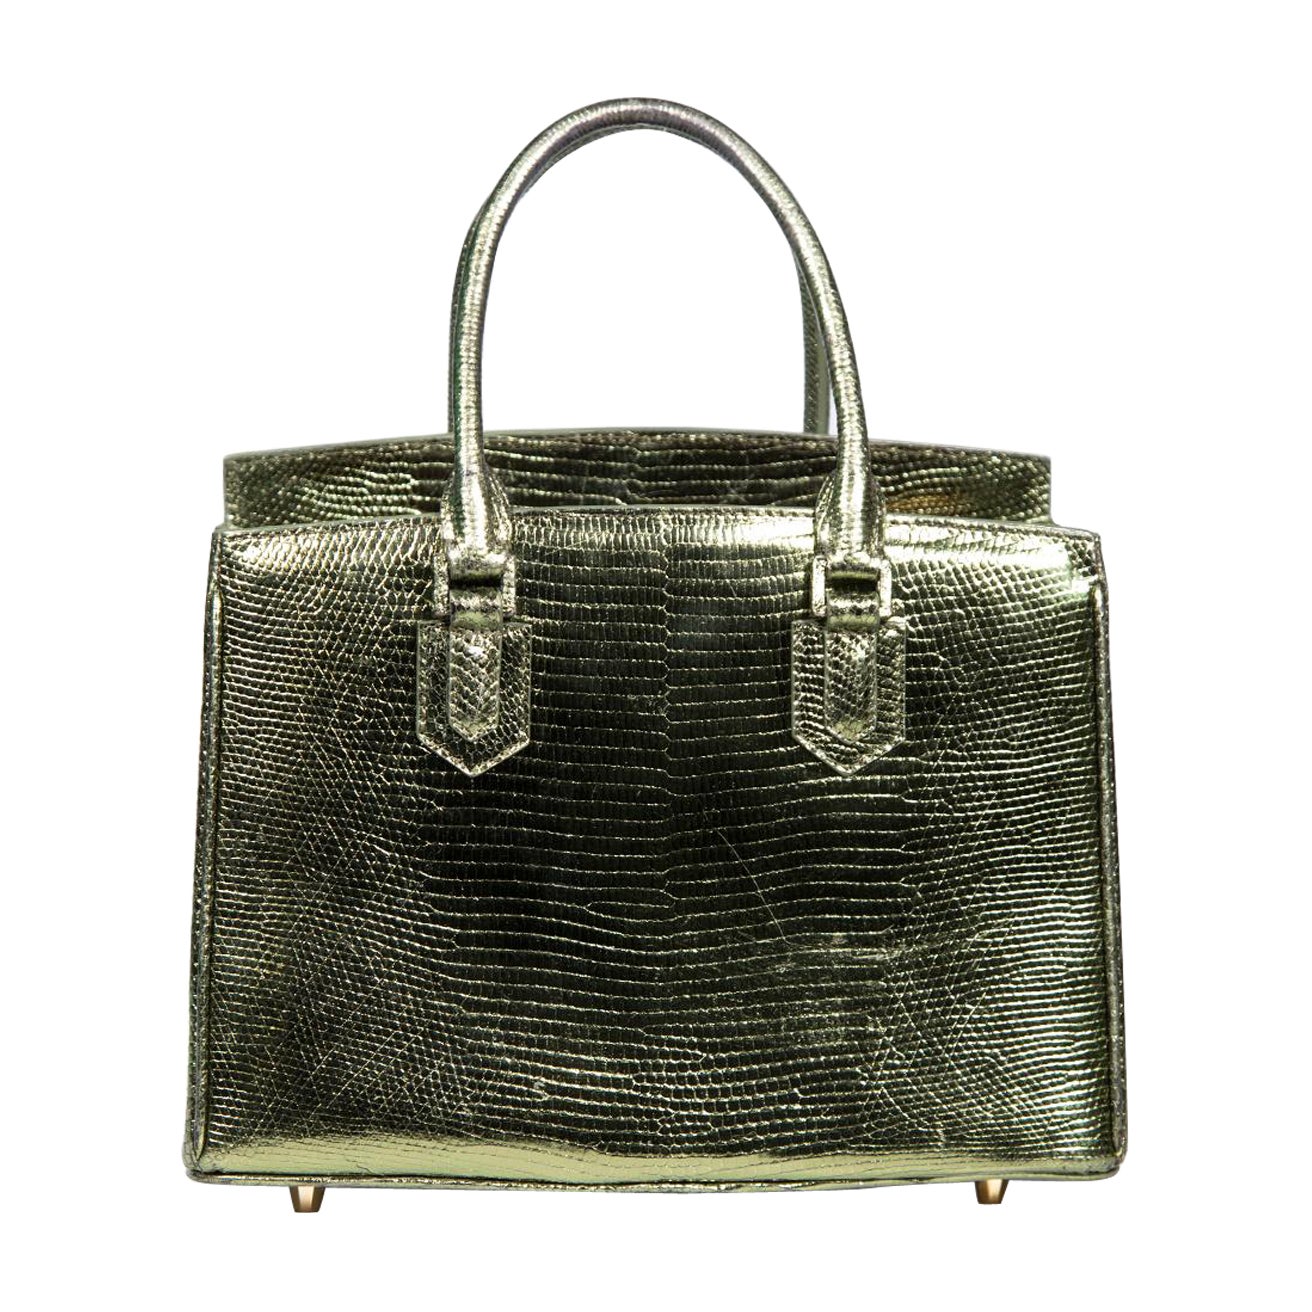 Ethan K Green Lizard Leather Metallic Handbag For Sale